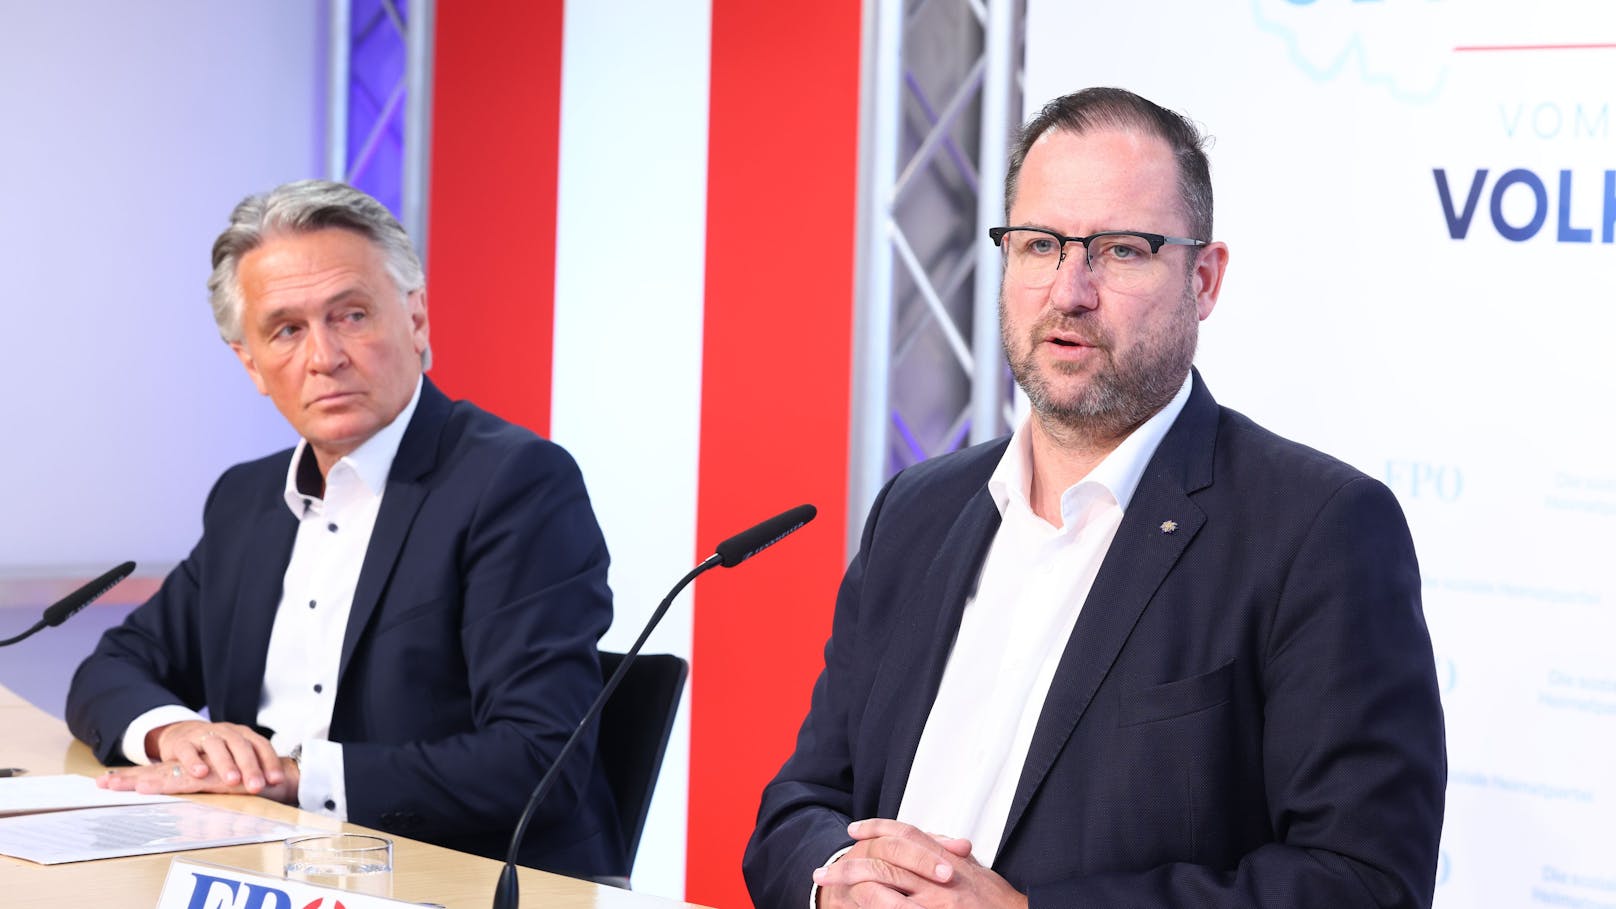 FPÖ knallhart: "Der ORF ist völlig durchgeknallt"